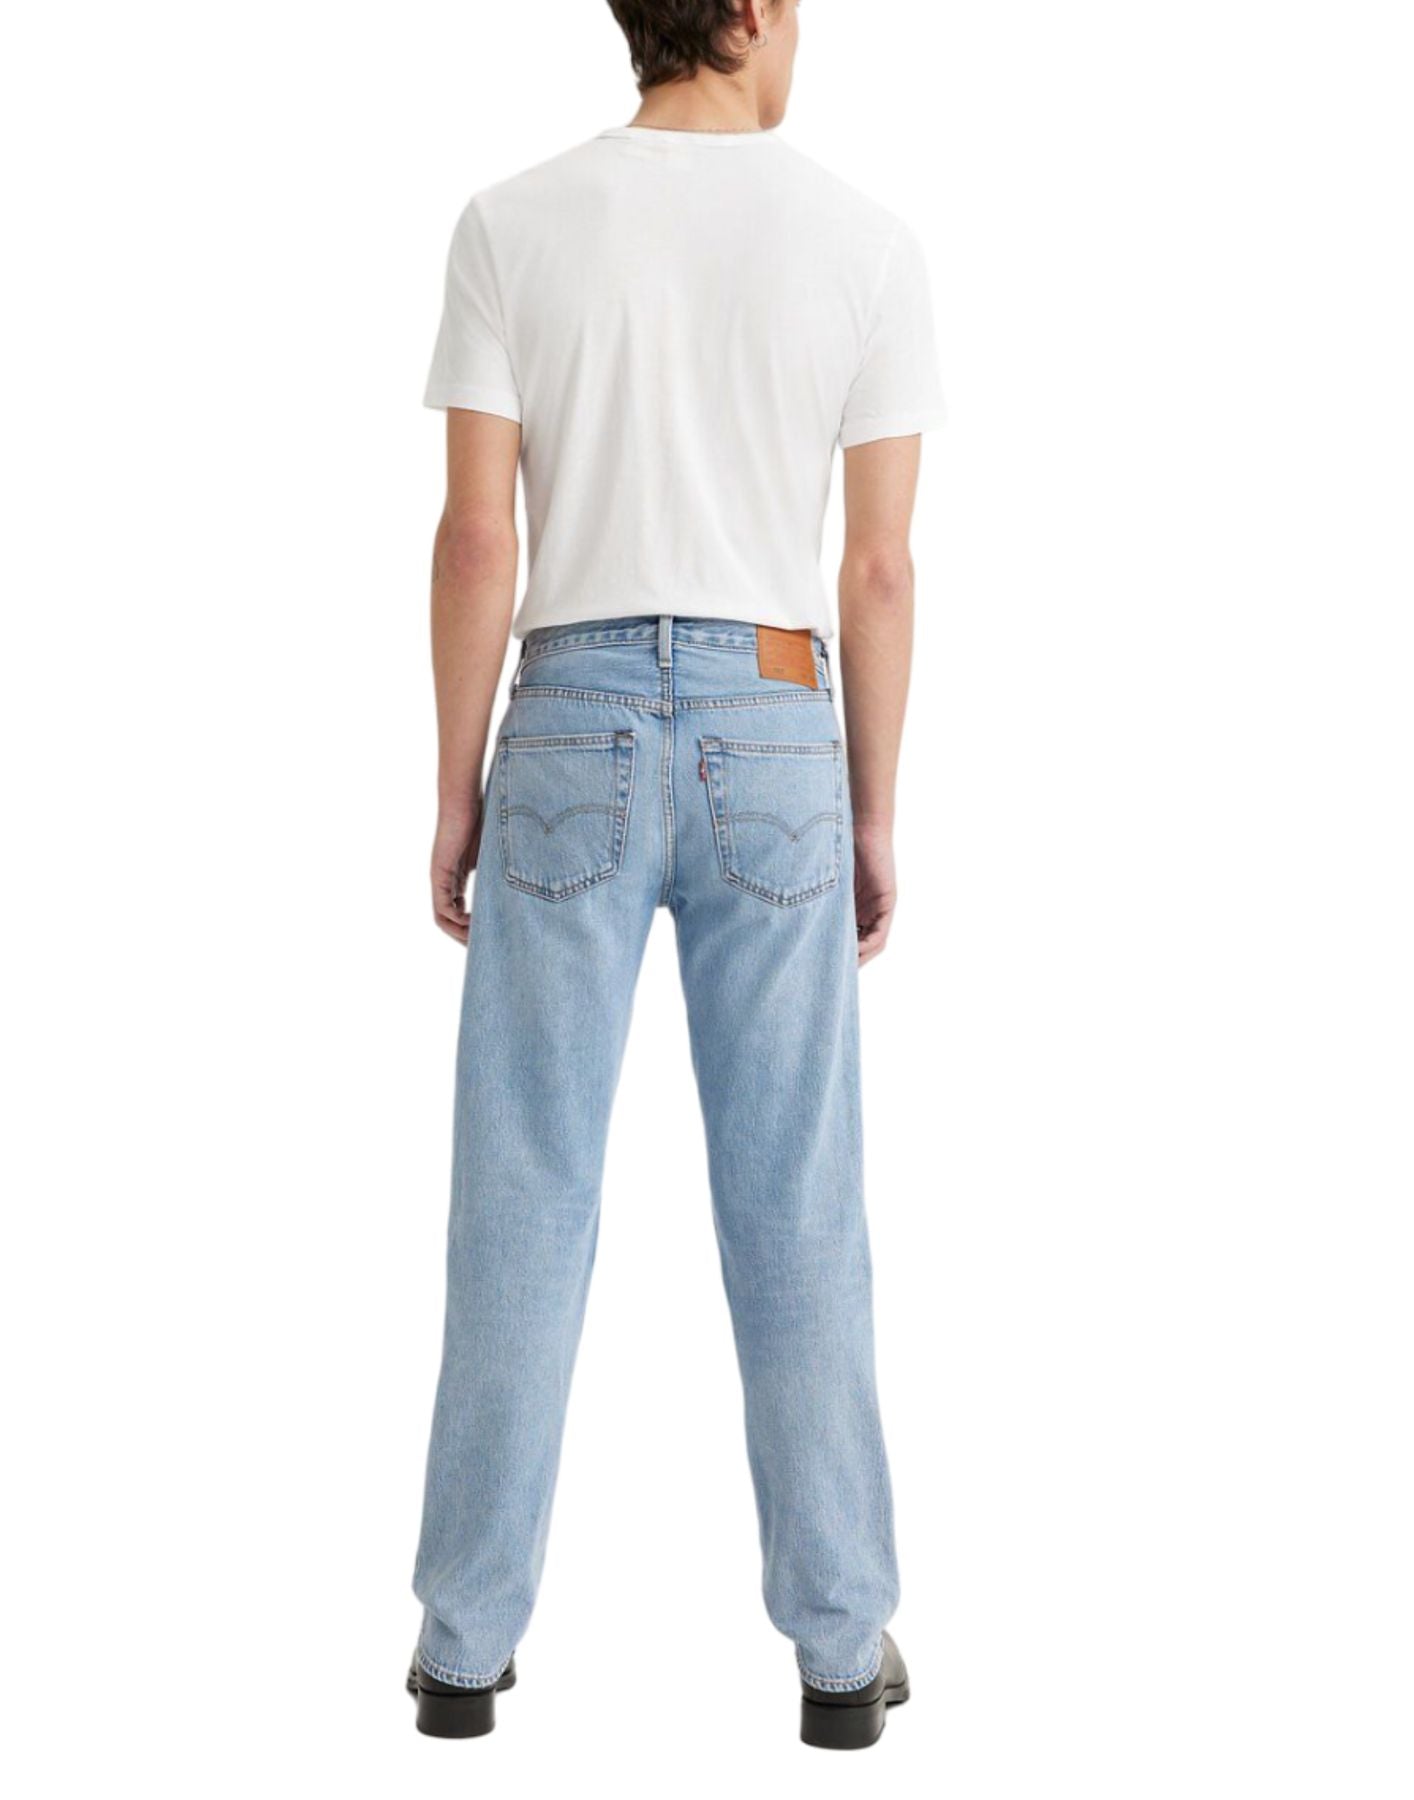 Jeans da uomo 00501 3410 blu Levi's